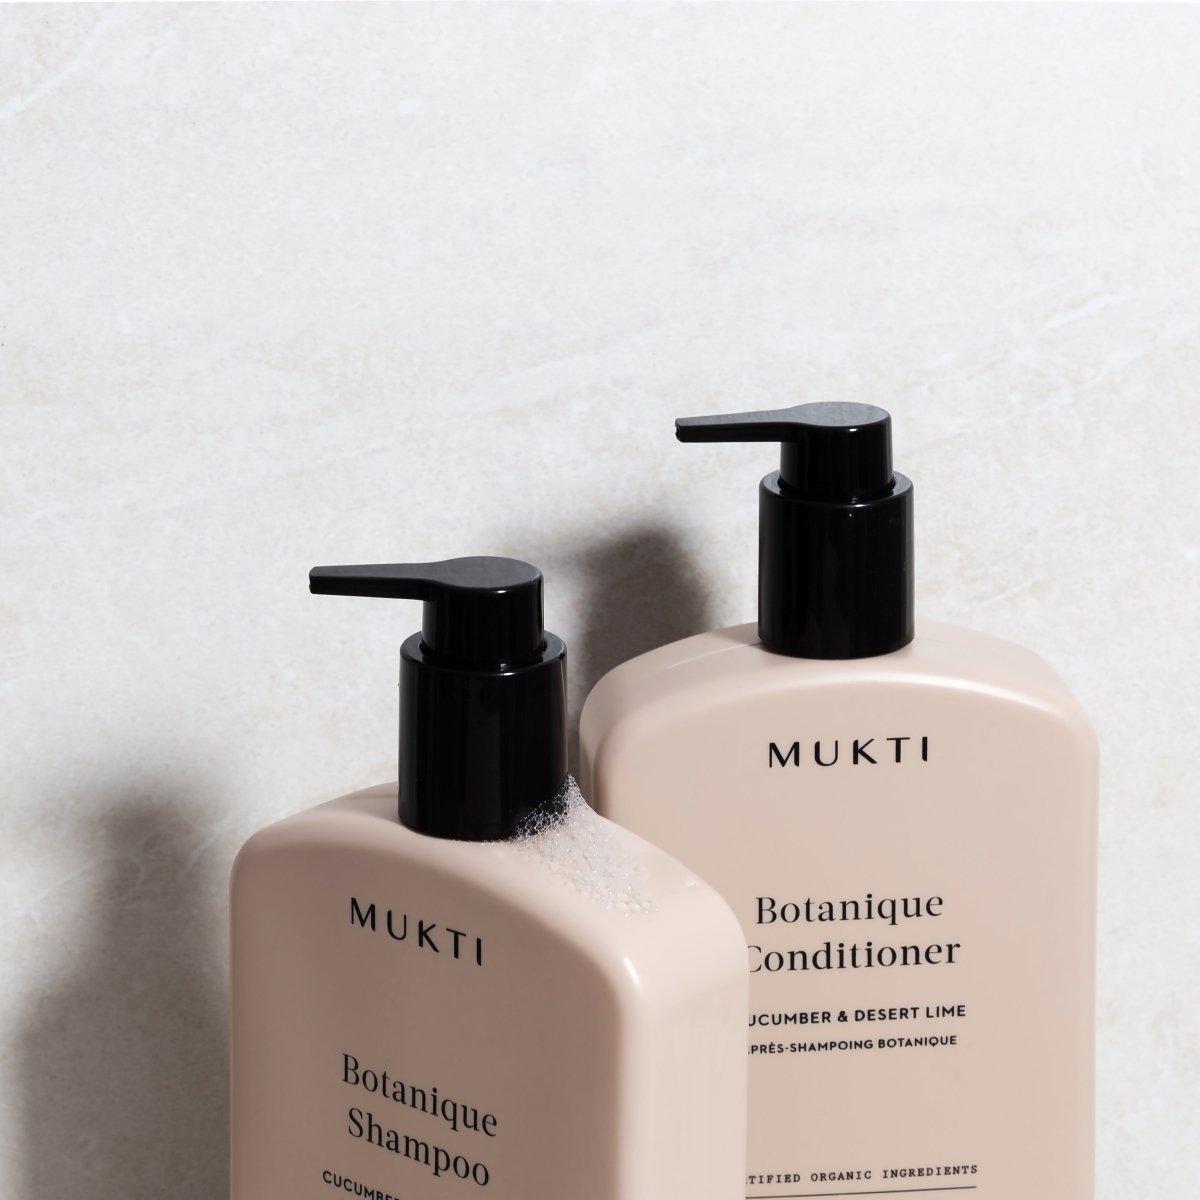 MUKTI Botanique Shampoo 天然草本洗髮水 [360ml] - MINT Organics